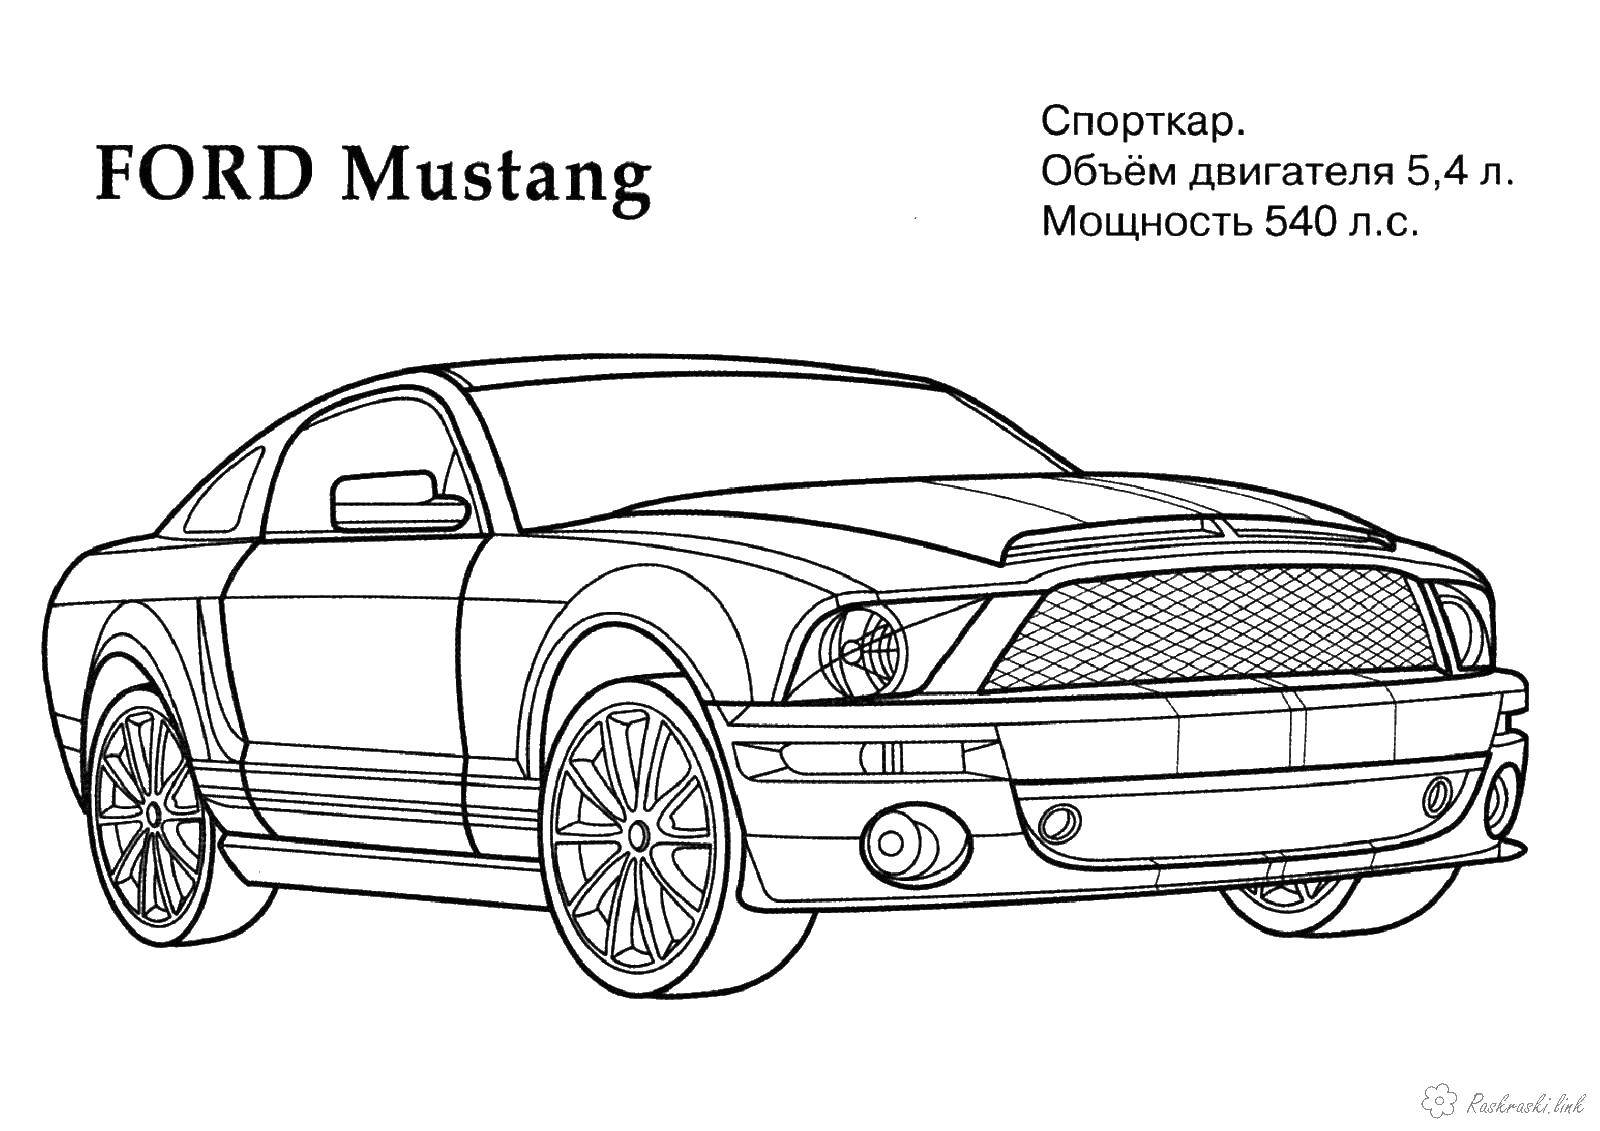 Название: Раскраска Спорткар форд мустанг. Категория: Машины. Теги: машины, спорткар, Мустанг.